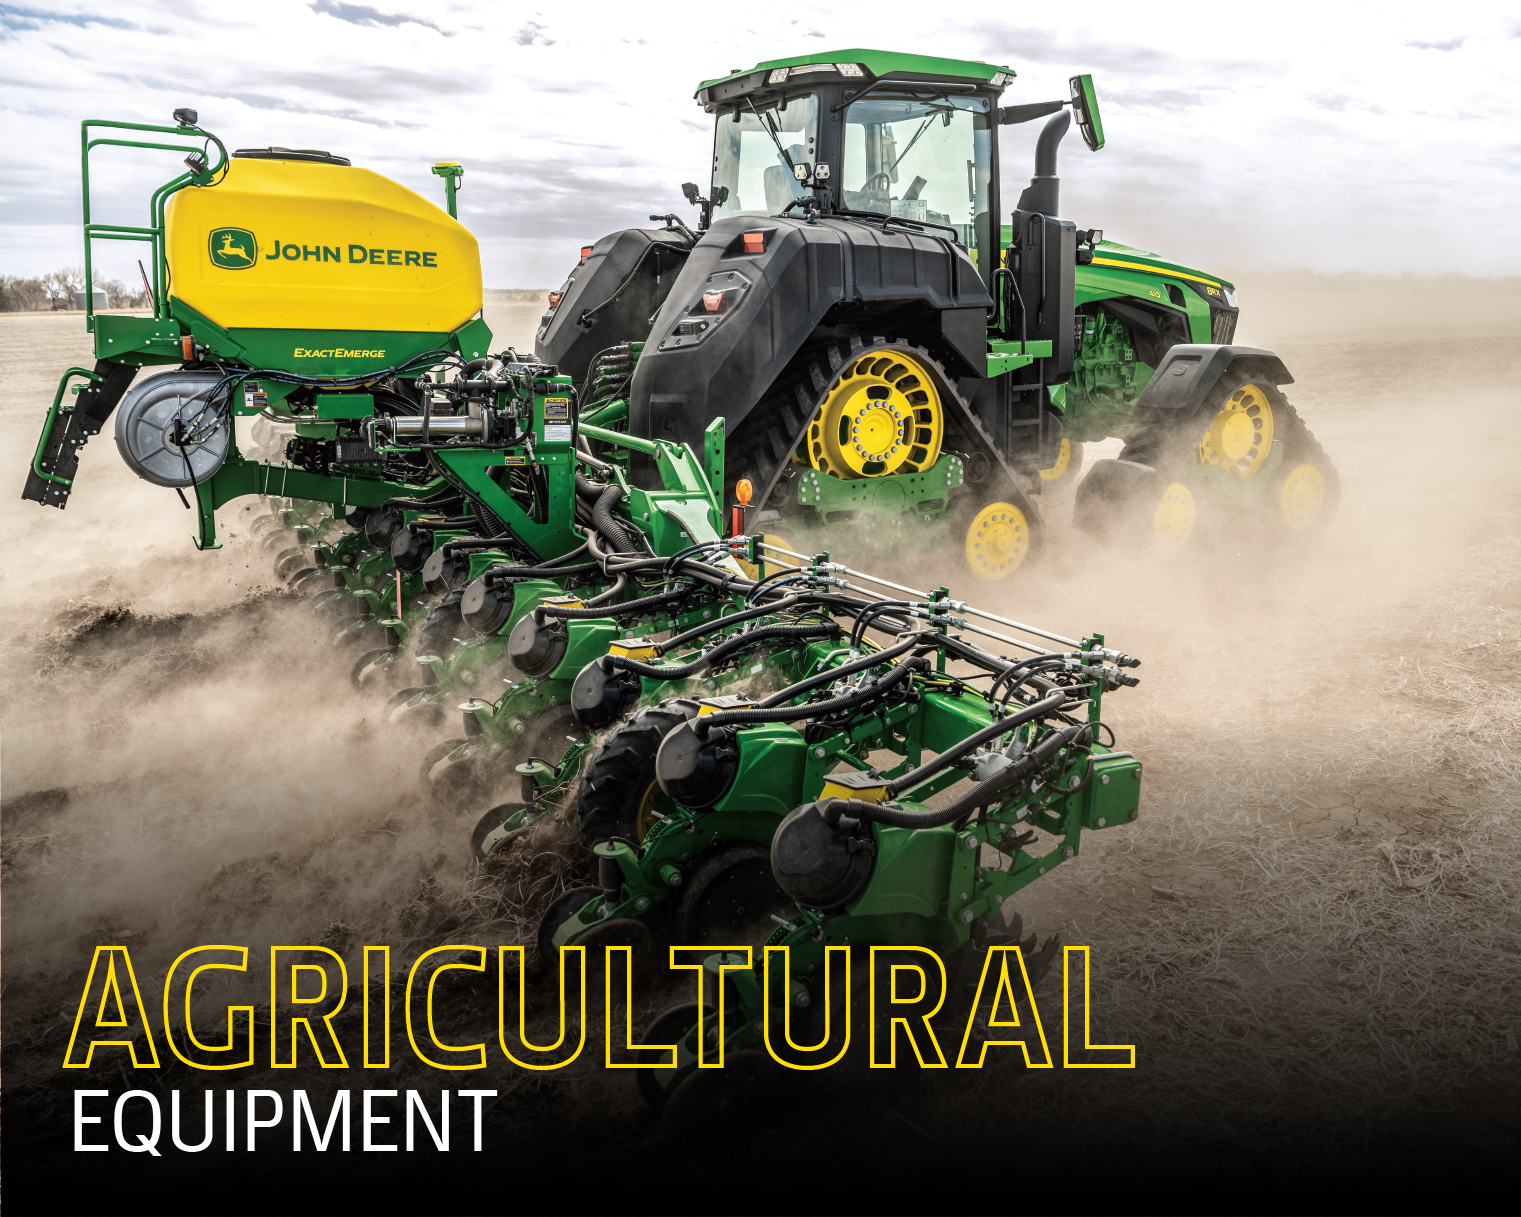 New Agricultural Equipment at Koenig Equipment